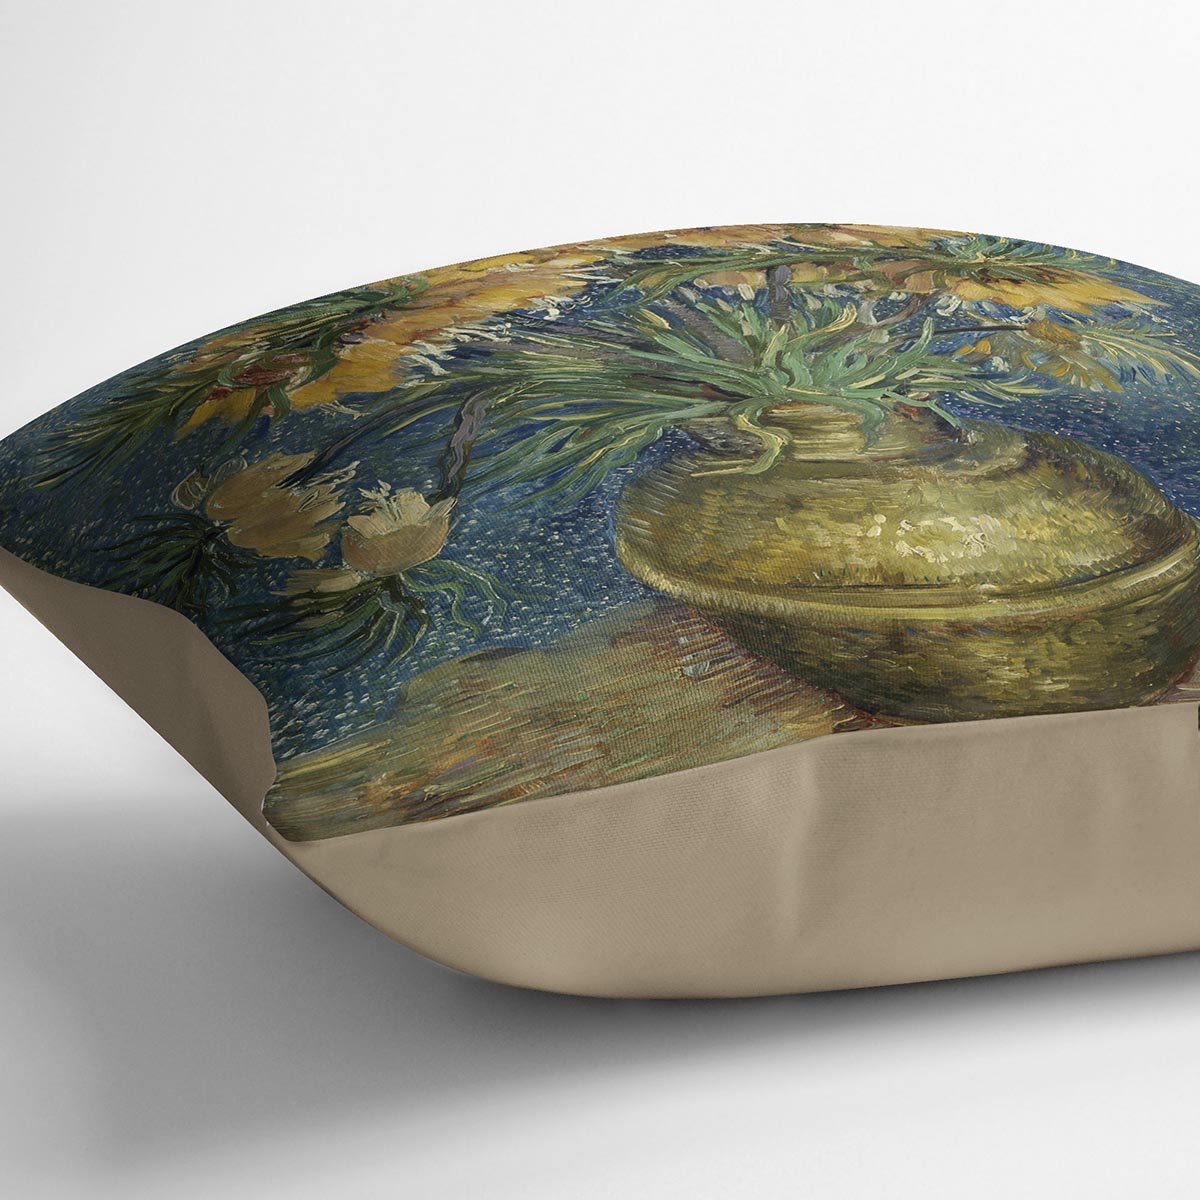 Van Gogh Fritillaries in a Copper Vase Throw Pillow